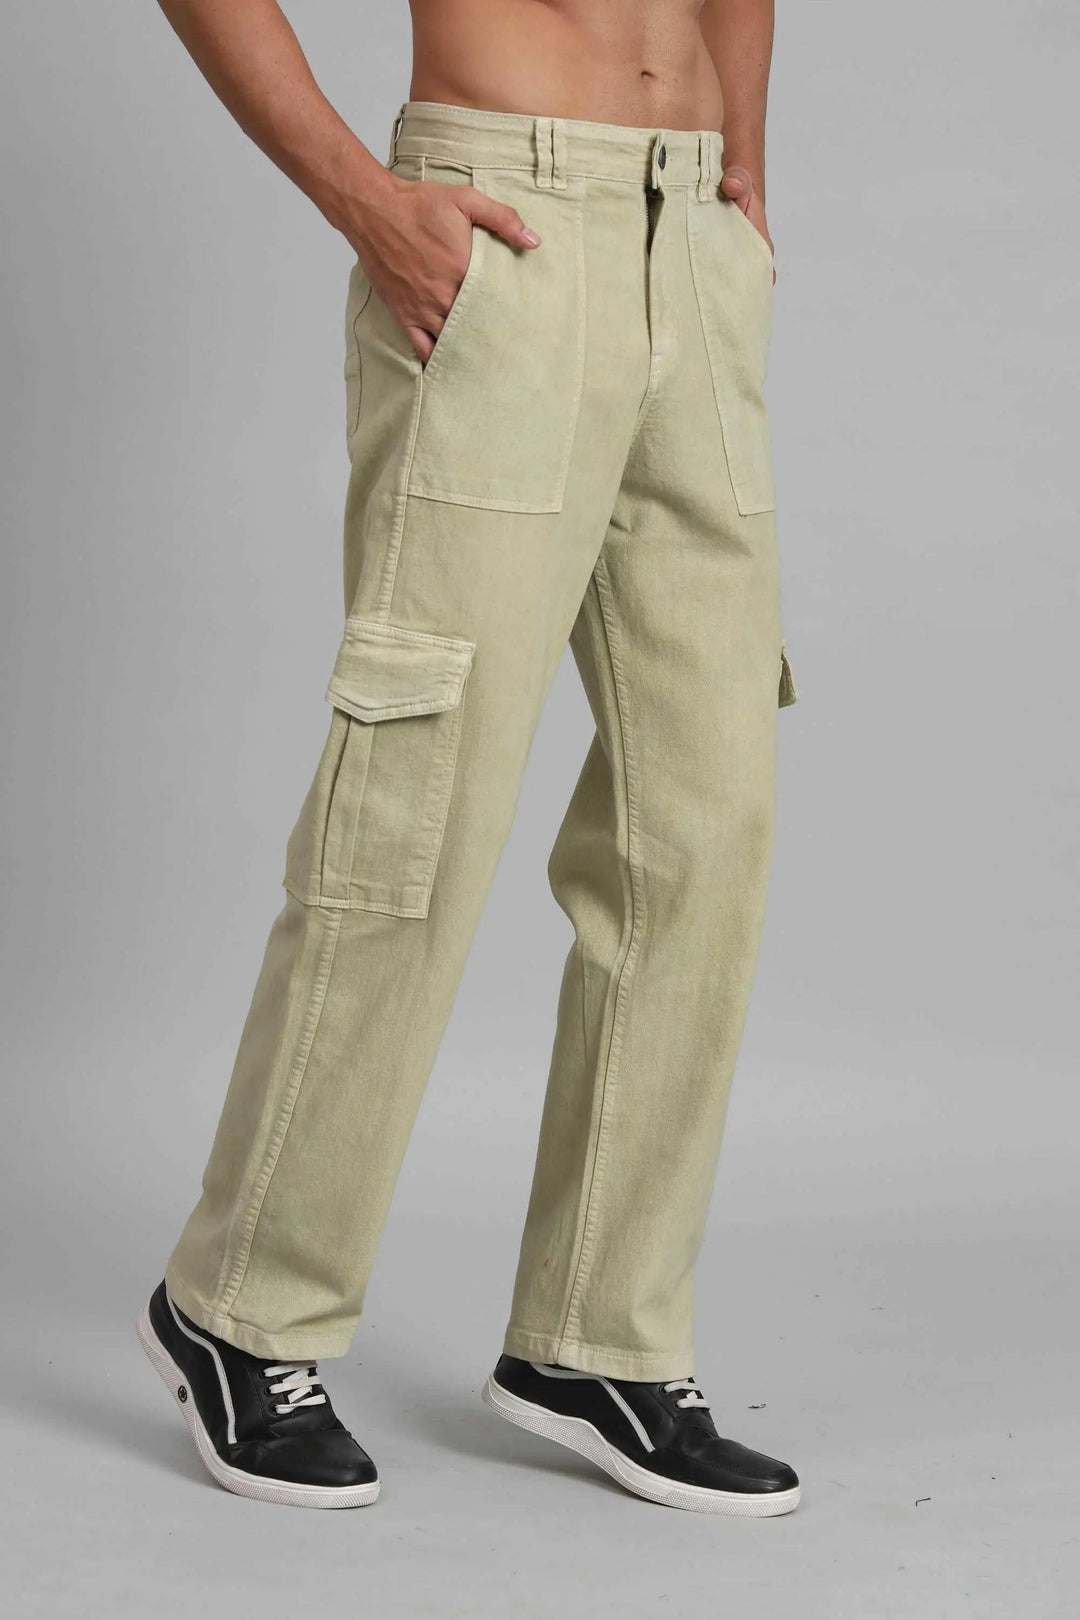 Men's Loose Fit Multiple Pocket Pista Lime Denim Cargo Pant - Peplos Jeans 